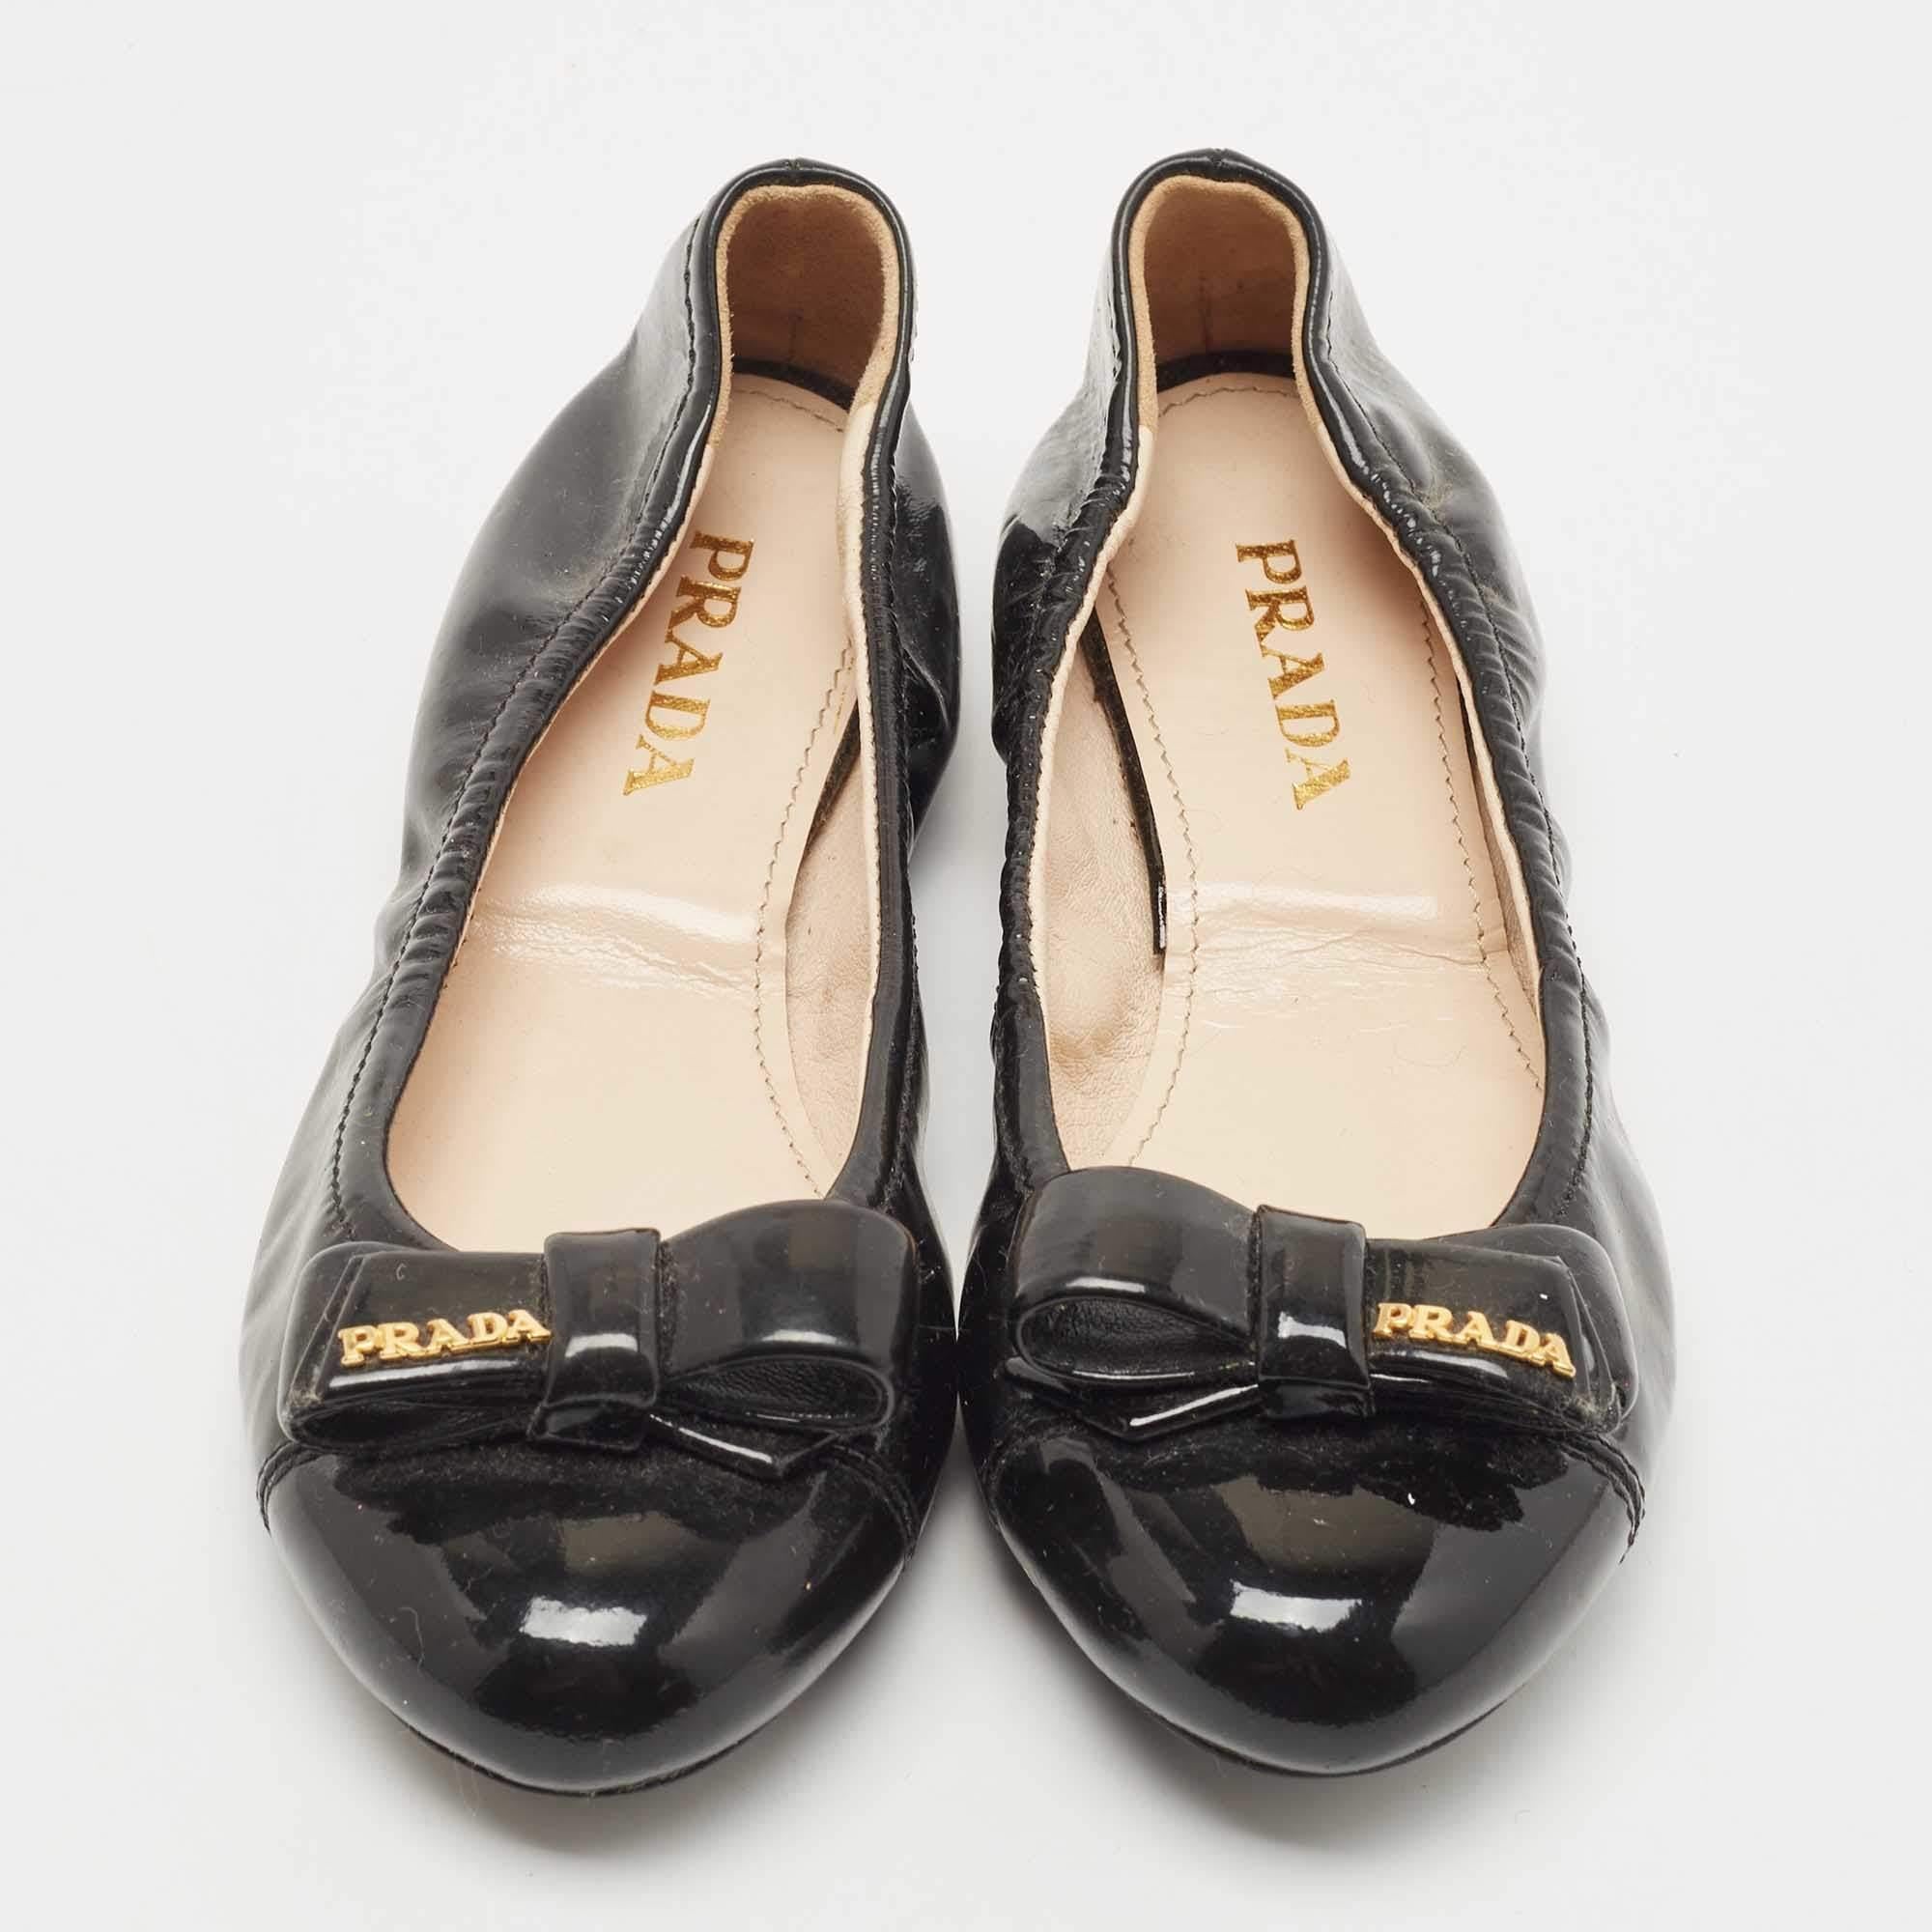 Prada Black Patent Leather Bow Detail Ballet Flats Size 36.5 3